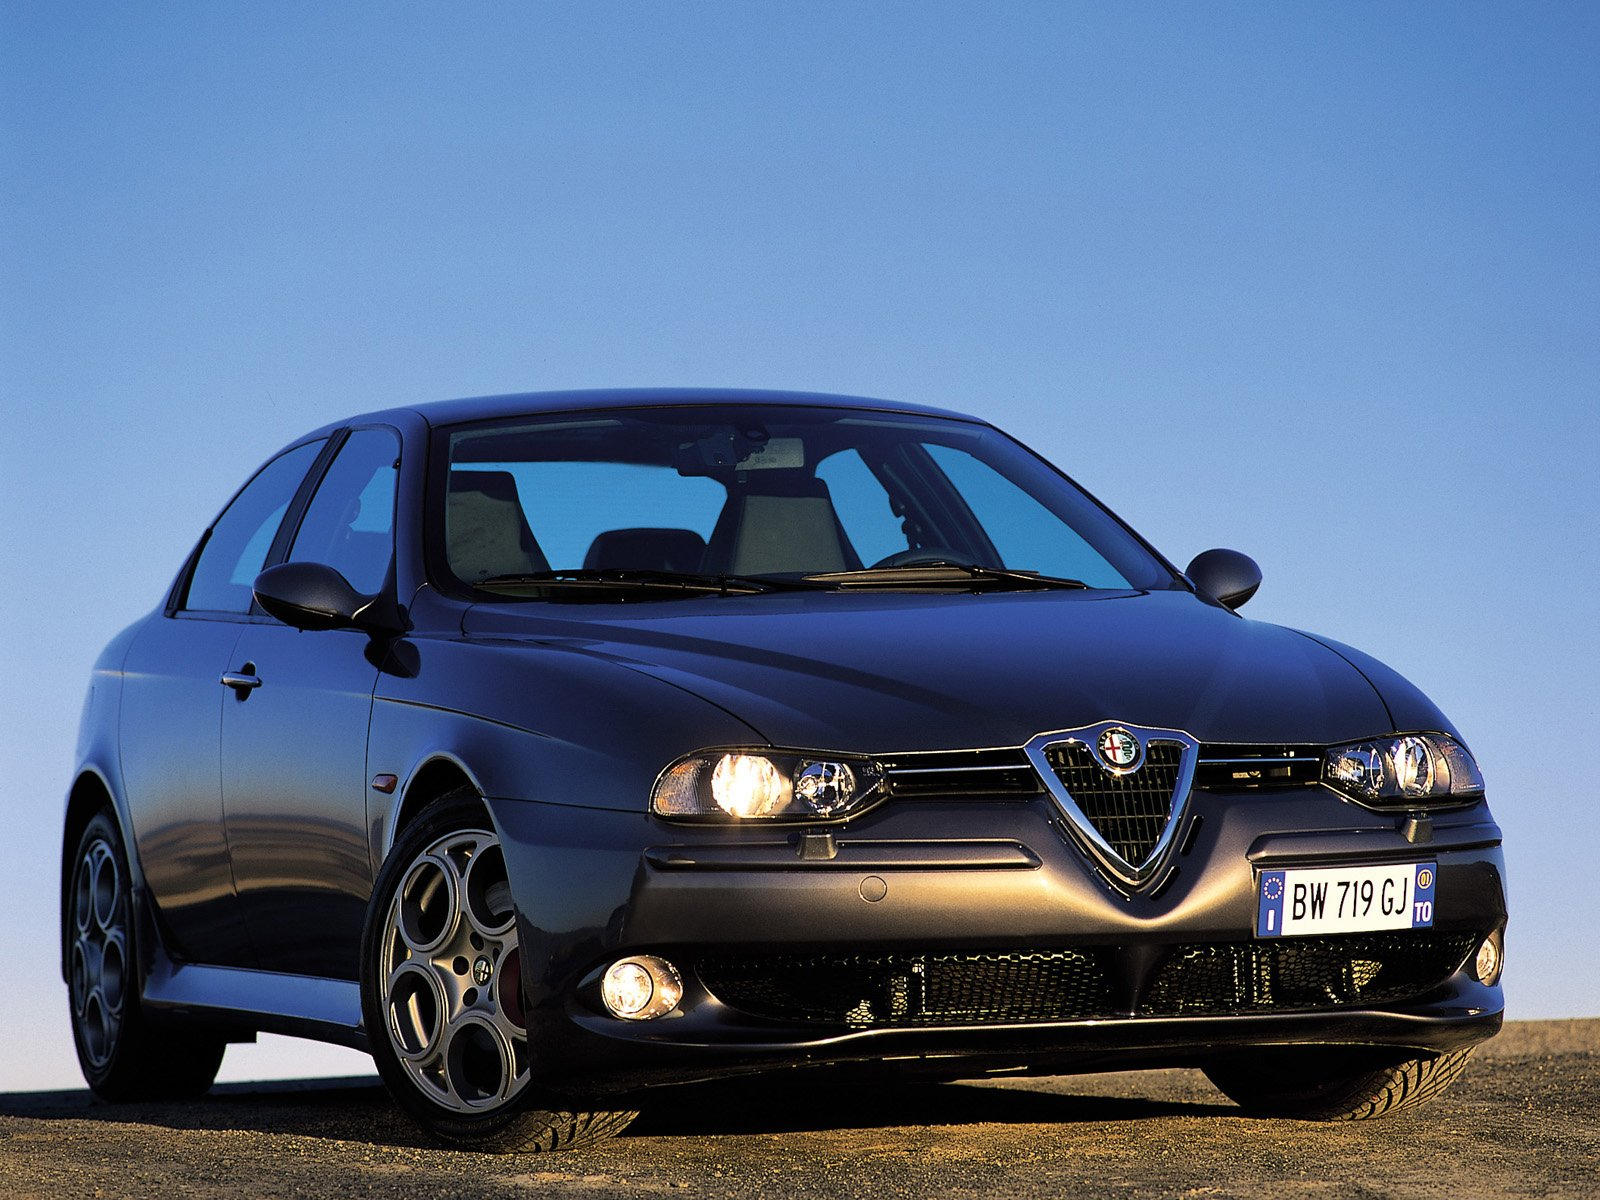 Alfa-Romeo 156  2.5 V6 24V Q system 190 KM - dane techniczne, wymiary, spalanie i opinie